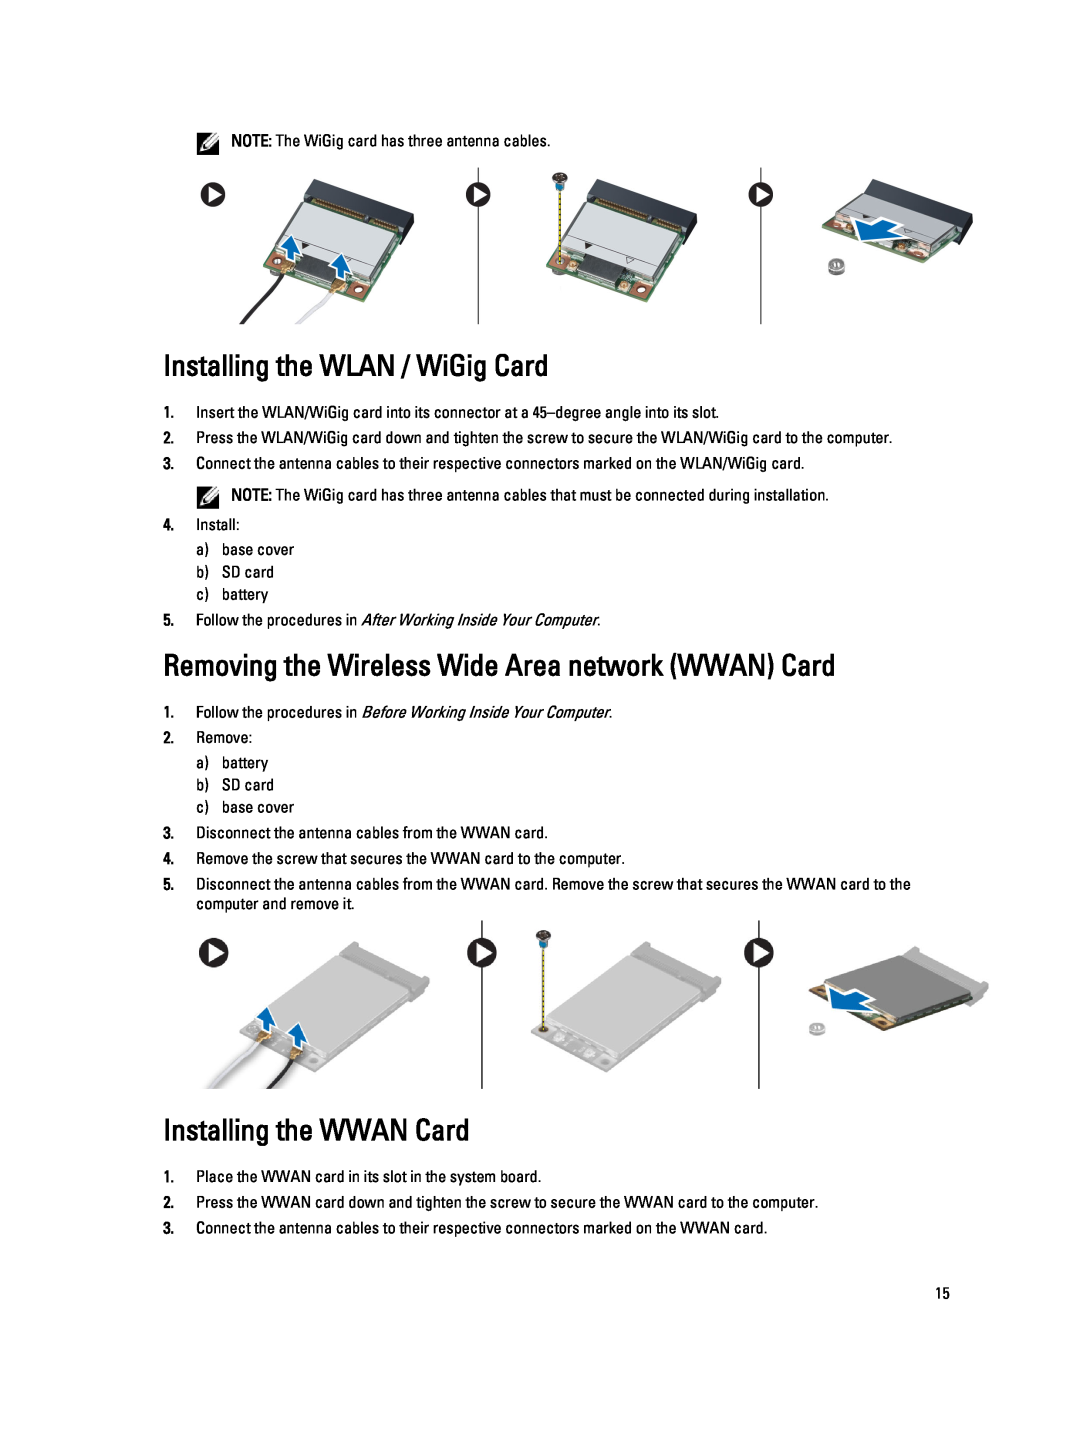 Dell 6430U Installing the WLAN / WiGig Card, Removing the Wireless Wide Area network WWAN Card, Installing the WWAN Card 